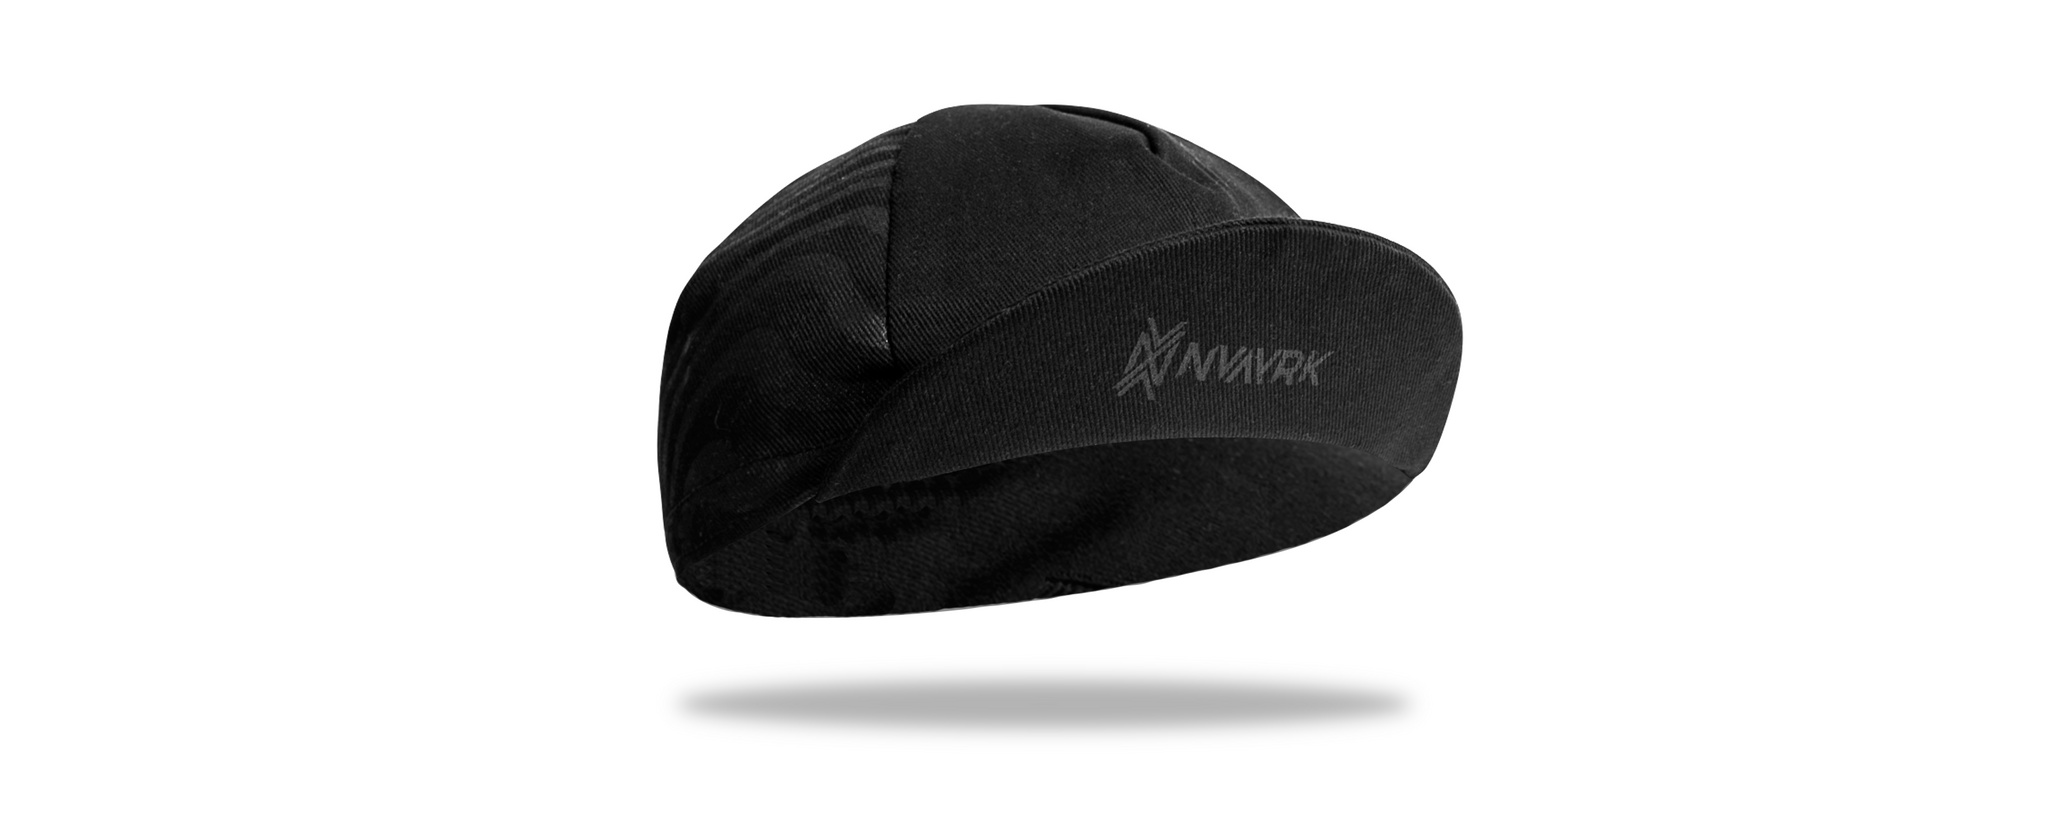 Essentials Waves Cycling Cap - Black On Black